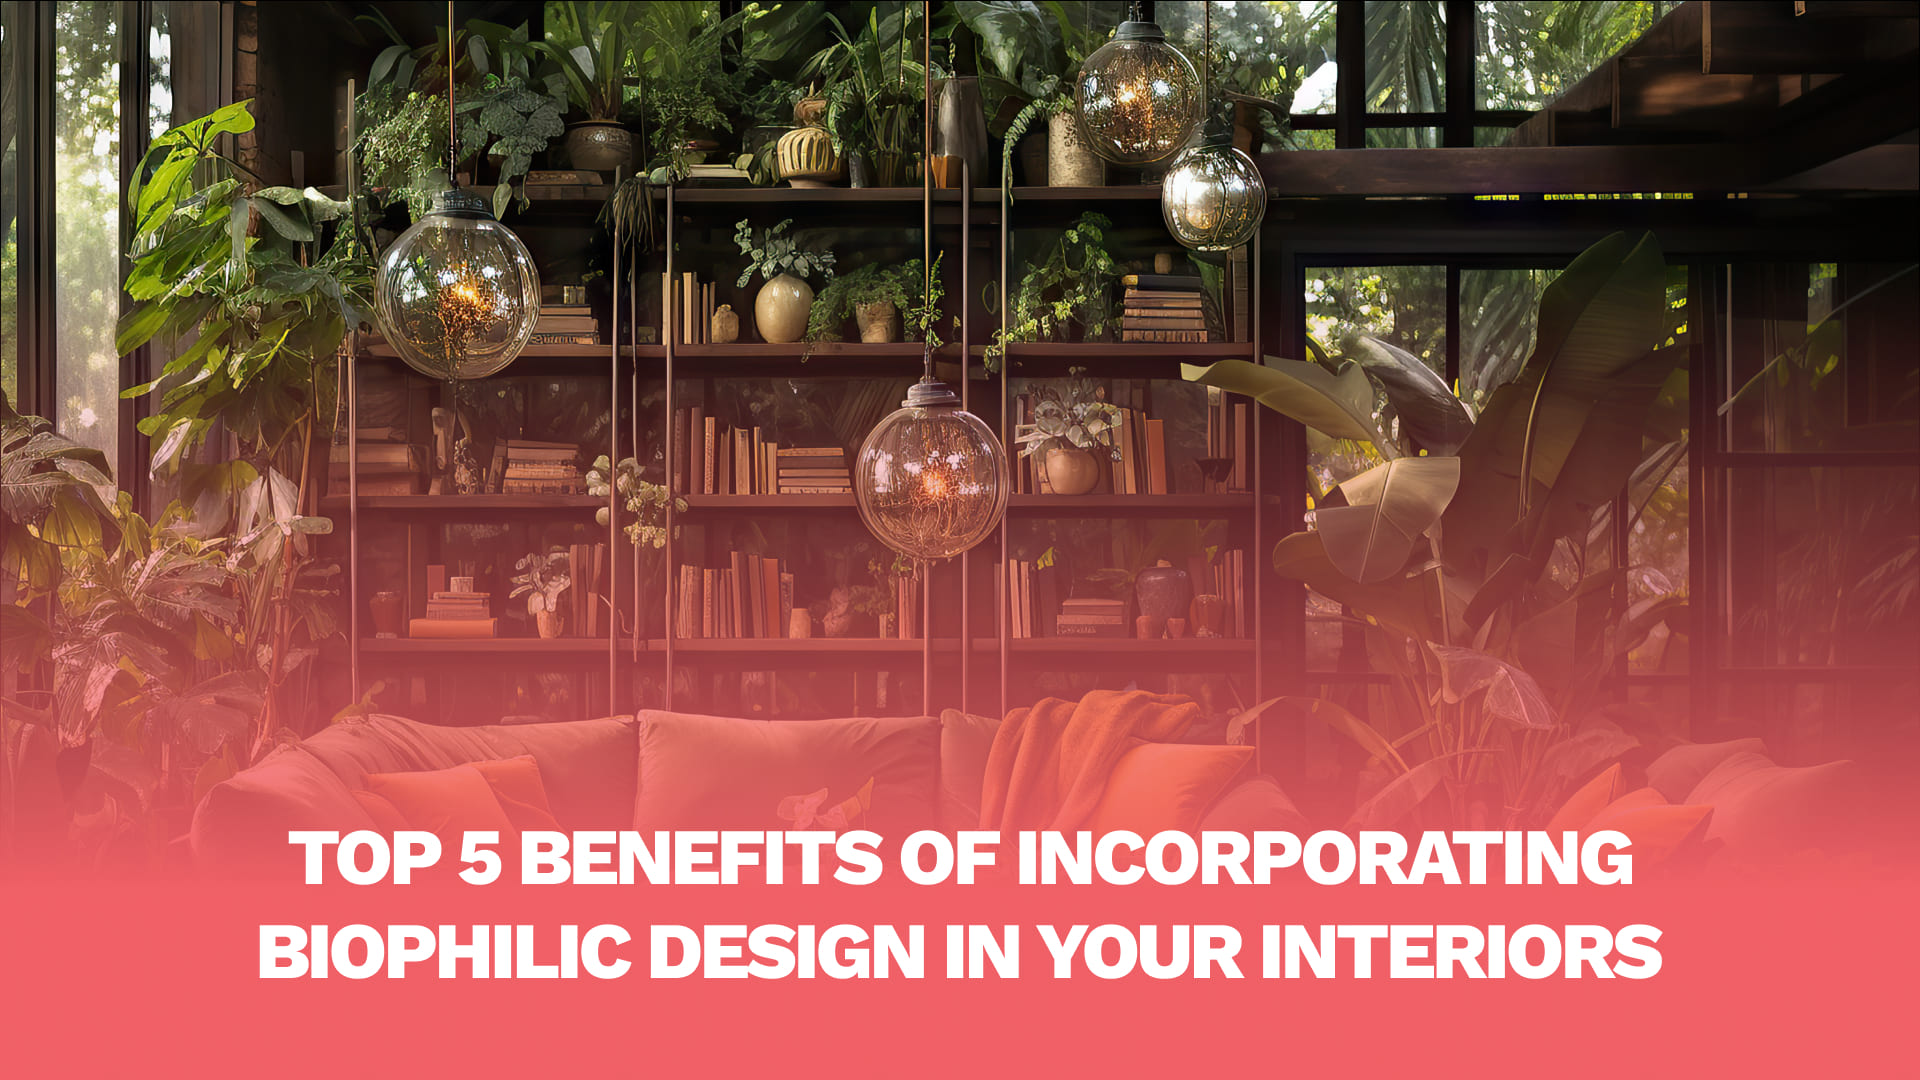 Top 5 Benefits of Incorporating Biophilic Design in Your Interiors